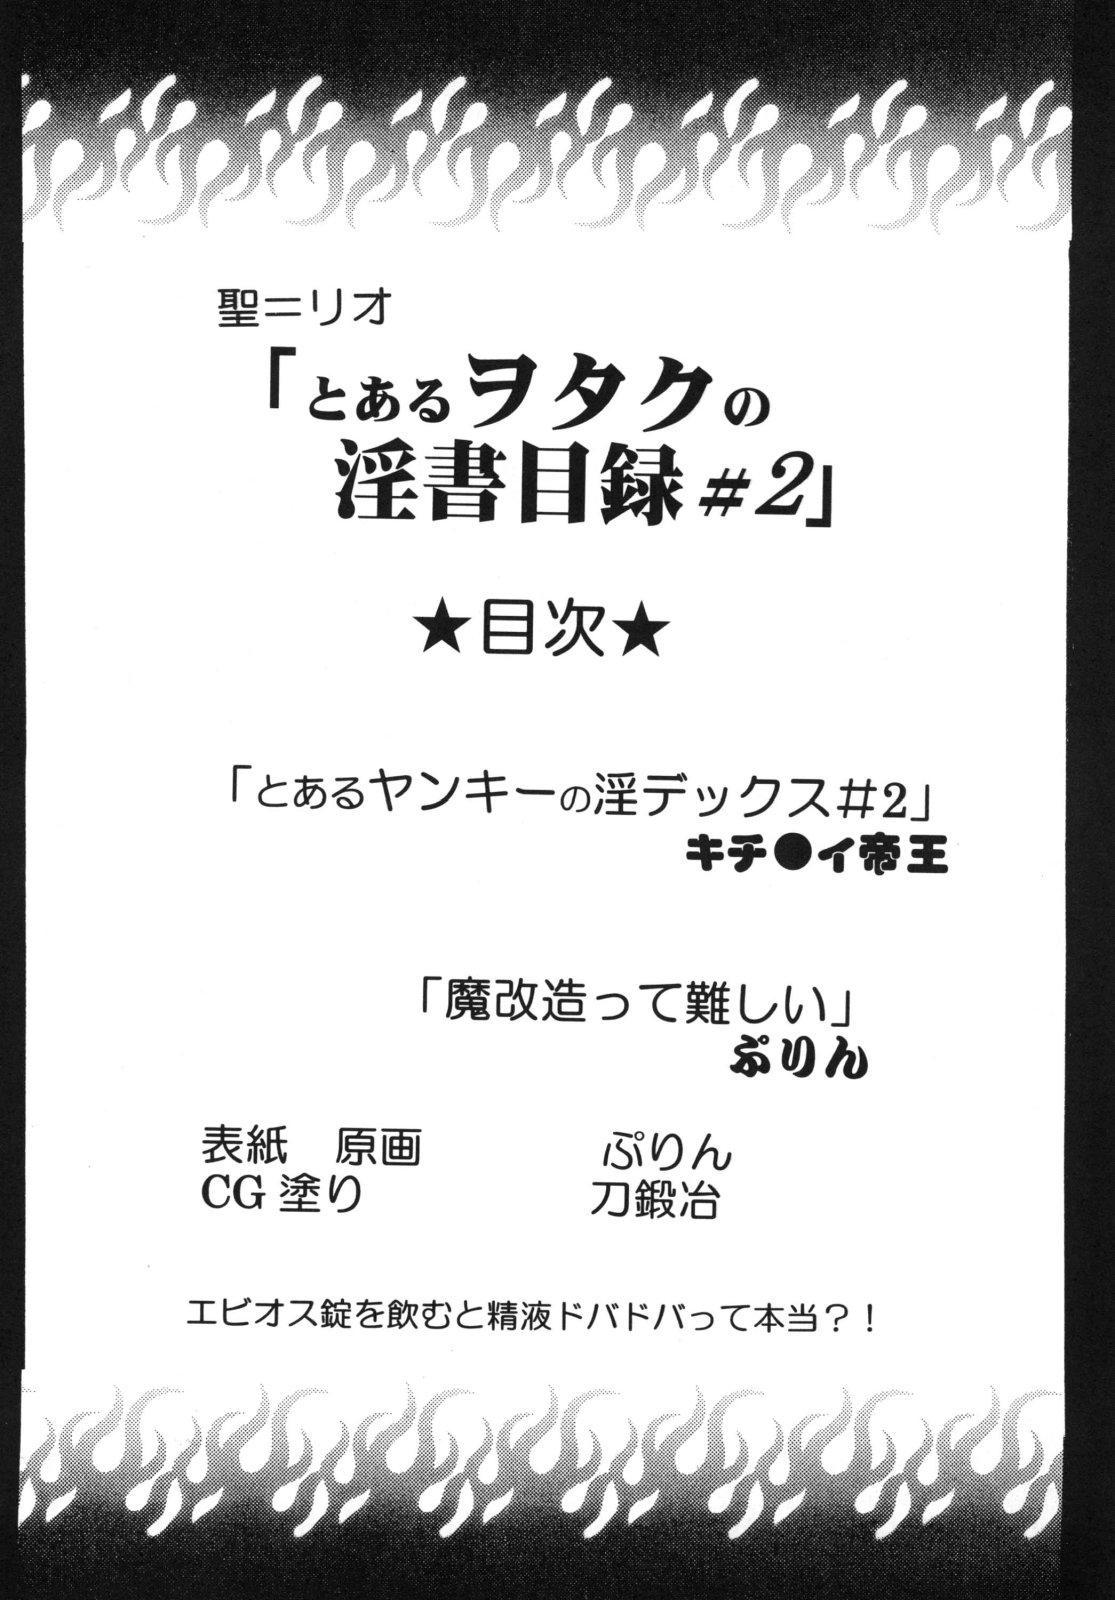 Clothed Sex Toaru Otaku no Index #2 | 某魔术的淫蒂克丝，某不良少年的茵蒂克丝#2 - Toaru majutsu no index | a certain magical index Jerk Off Instruction - Page 3